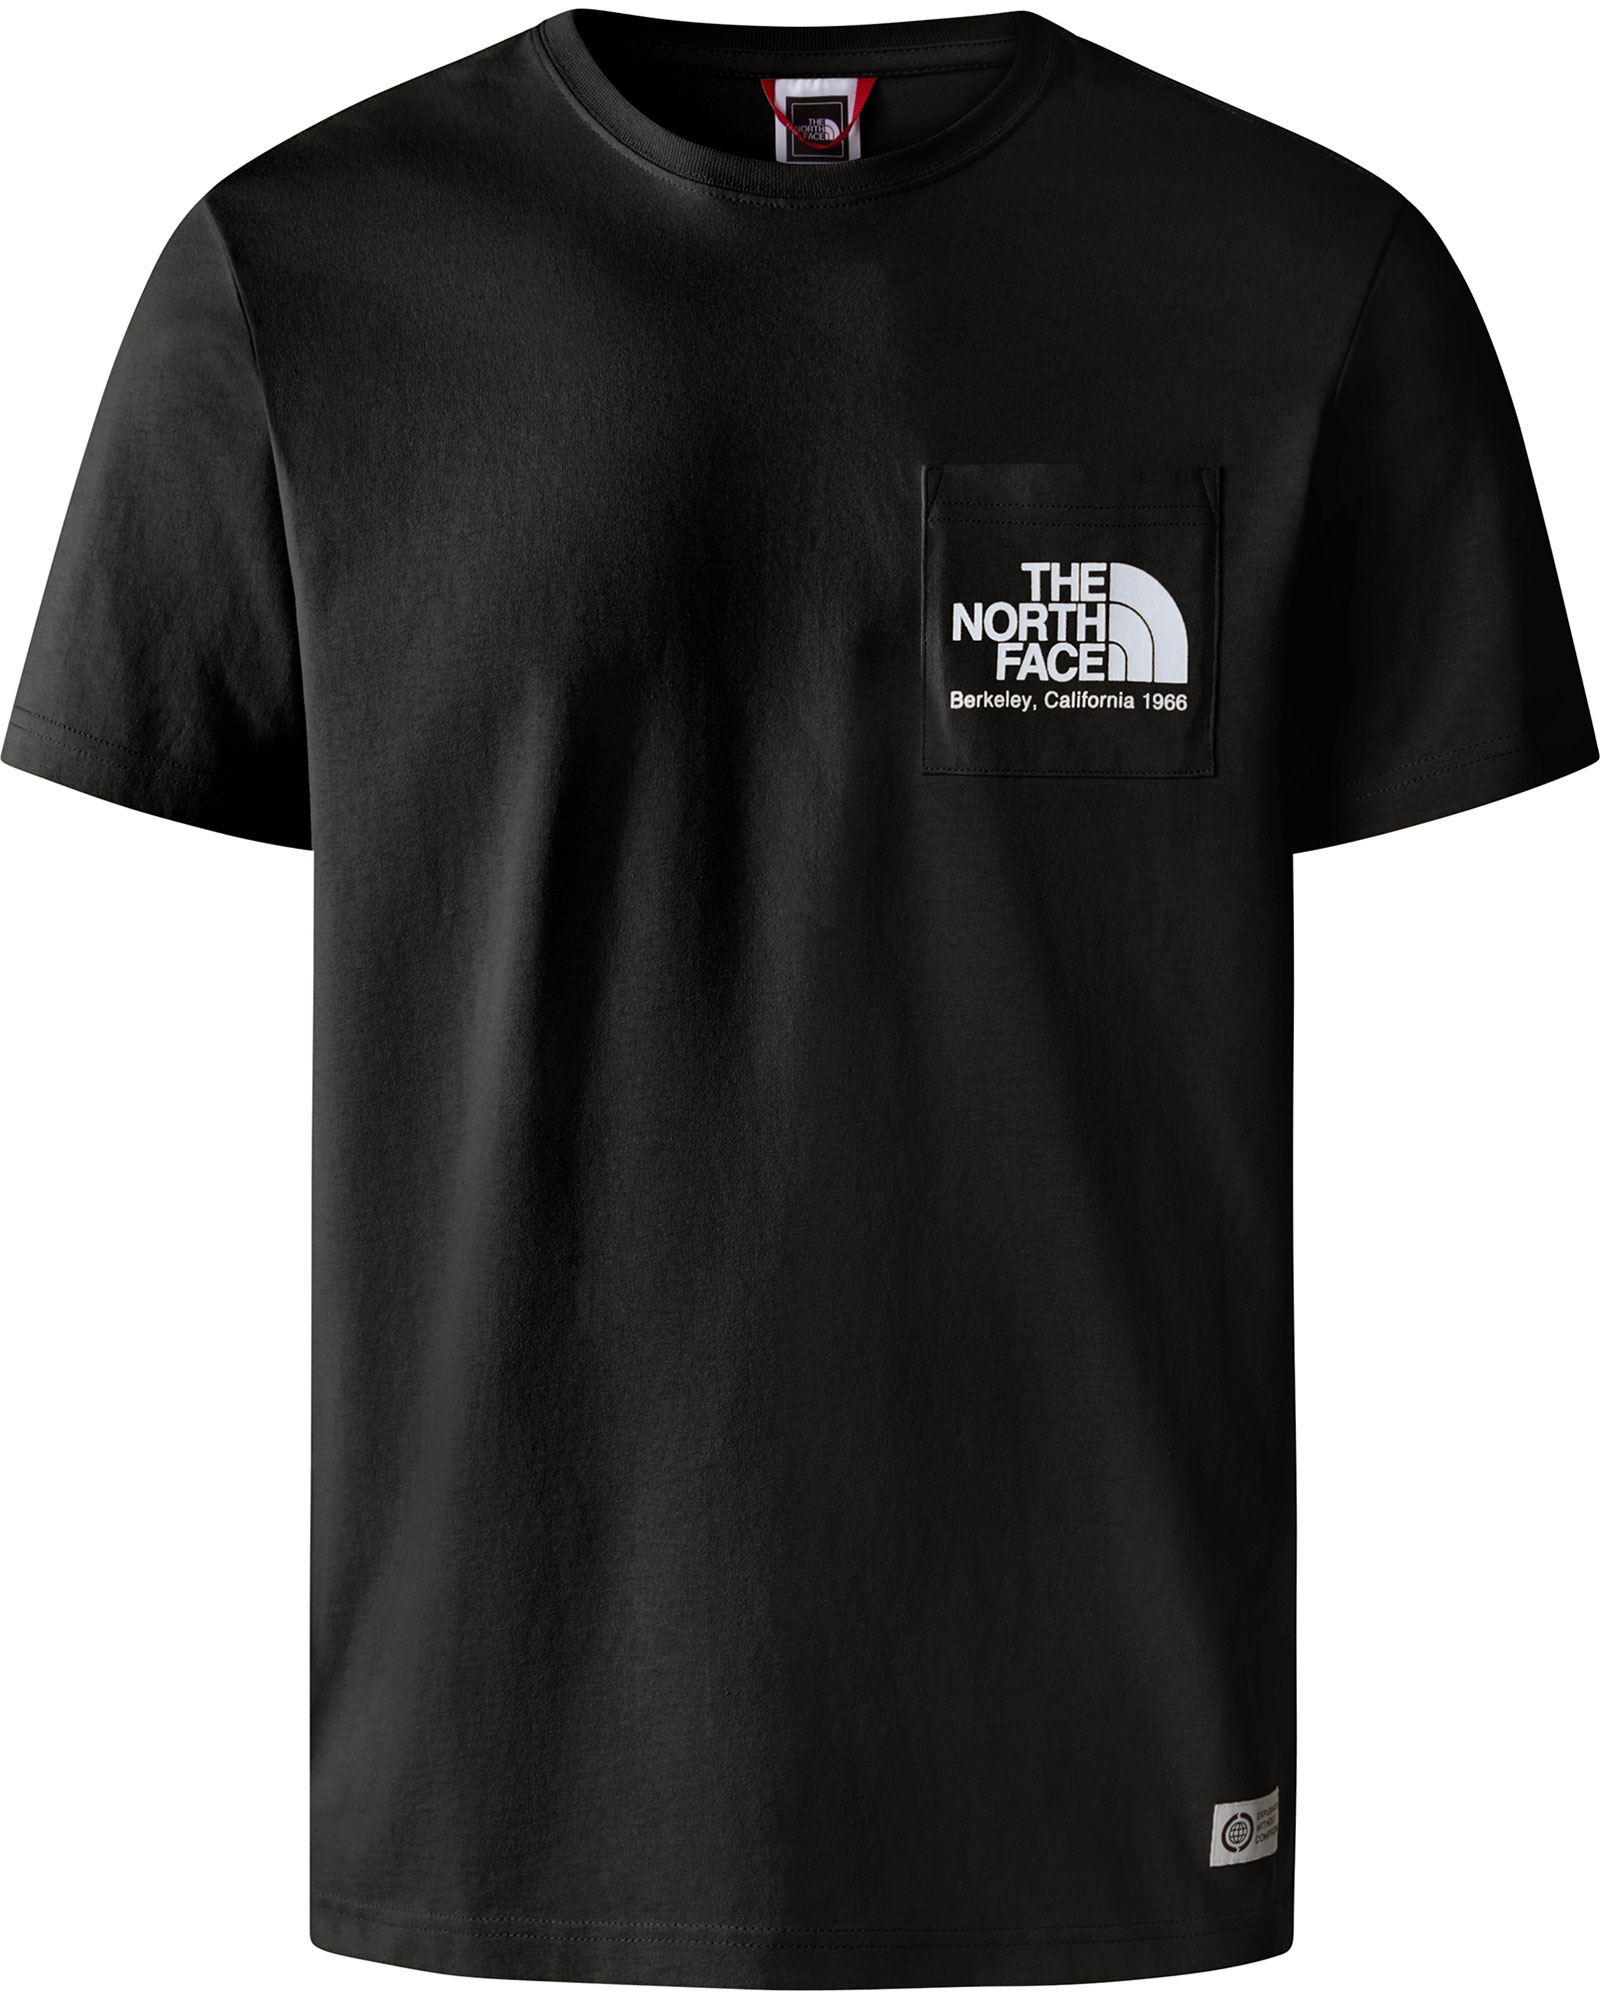 The North Face Men’s Berkeley California Pocket T Shirt - TNF Black L